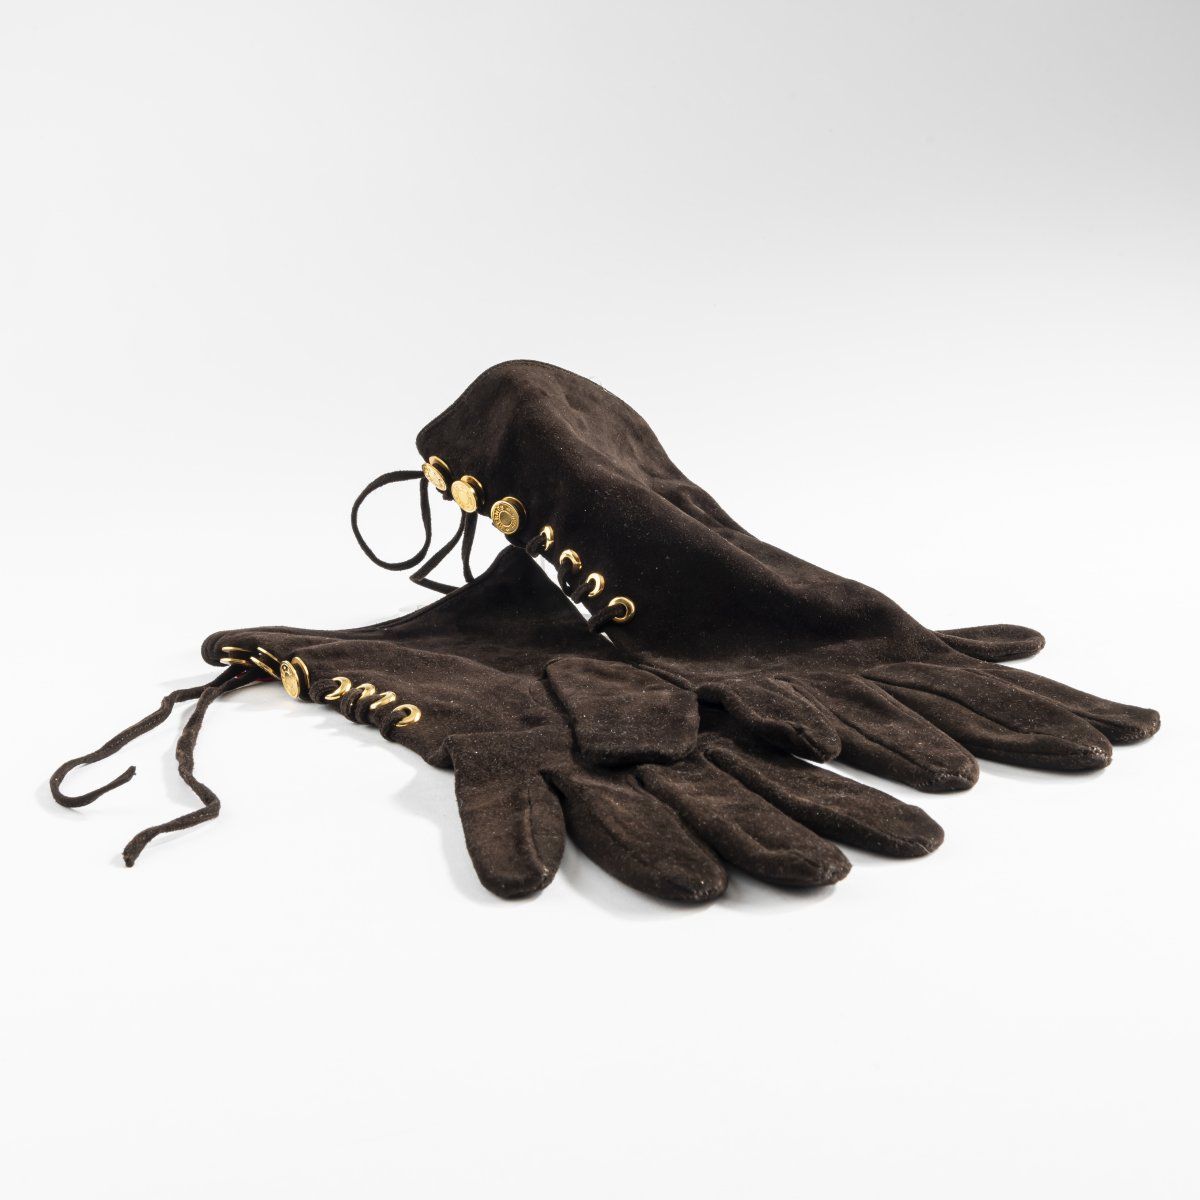 Null 爱马仕，巴黎，麂皮手套，麂皮，丝绸衬里，金色五金。长28.5厘米。

已签名。Hermès Paris 法国制造。